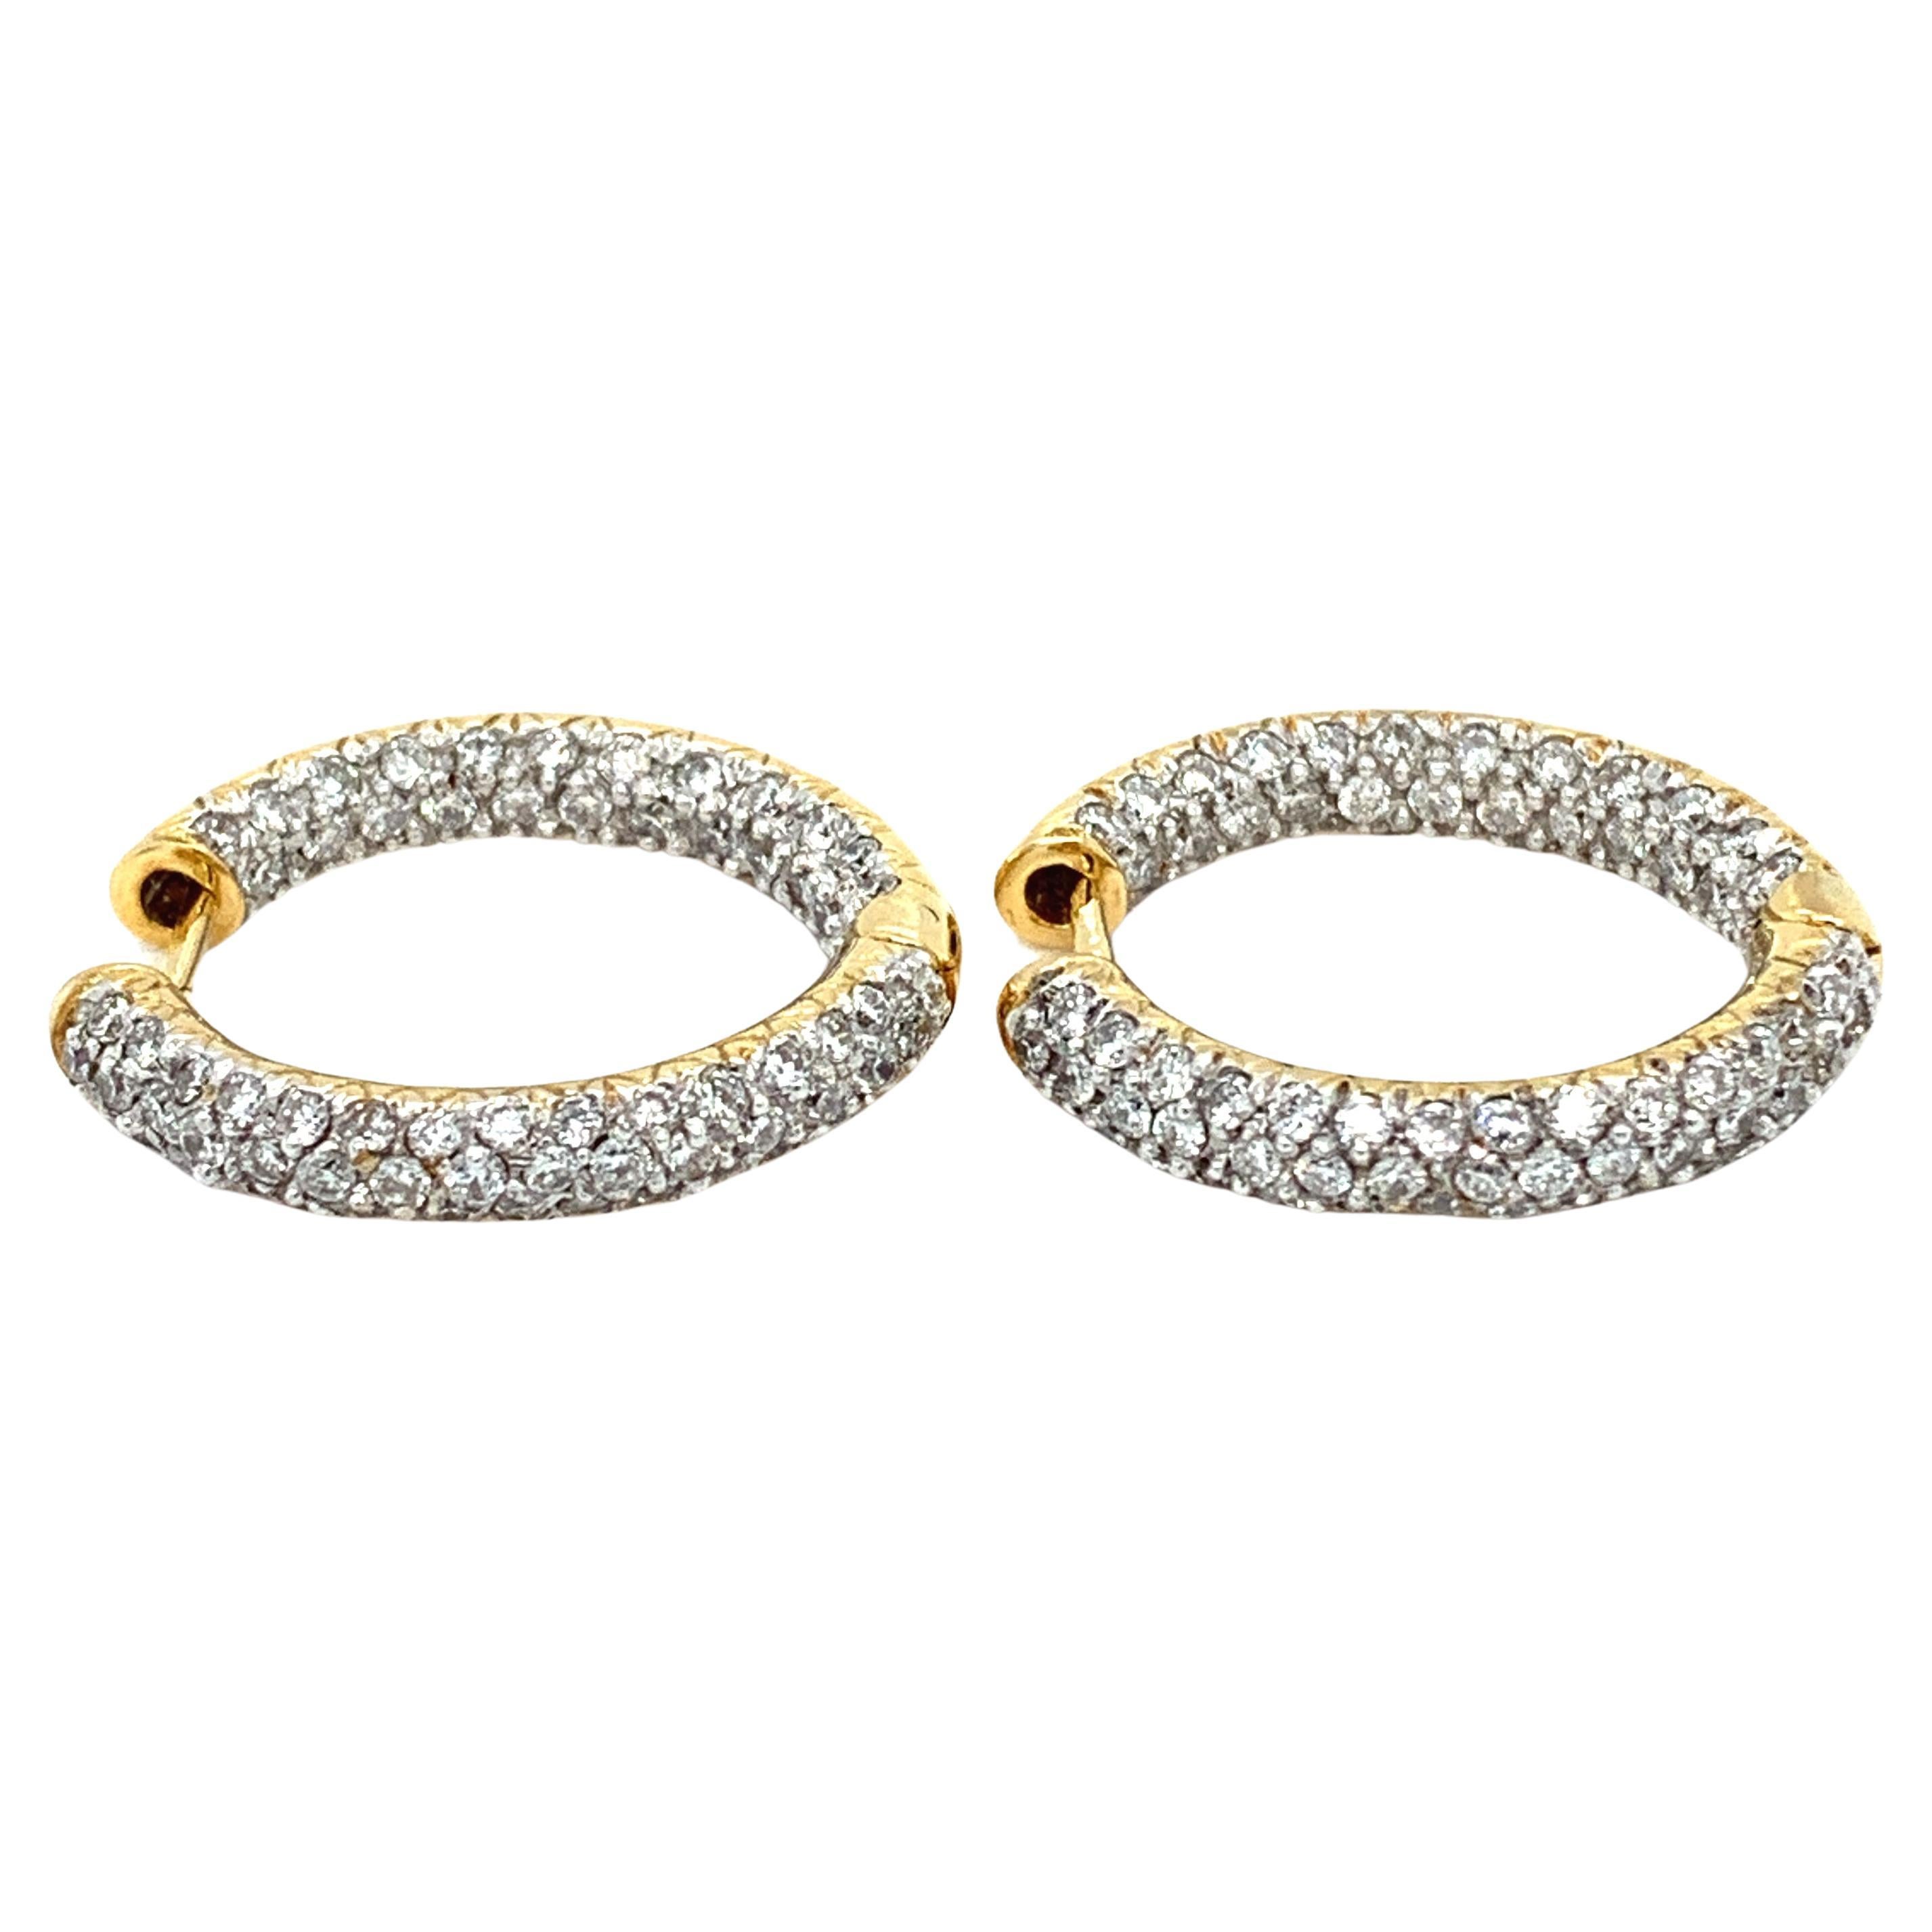 Diamond art deco hoops huggies earrings 18k yellow gold For Sale